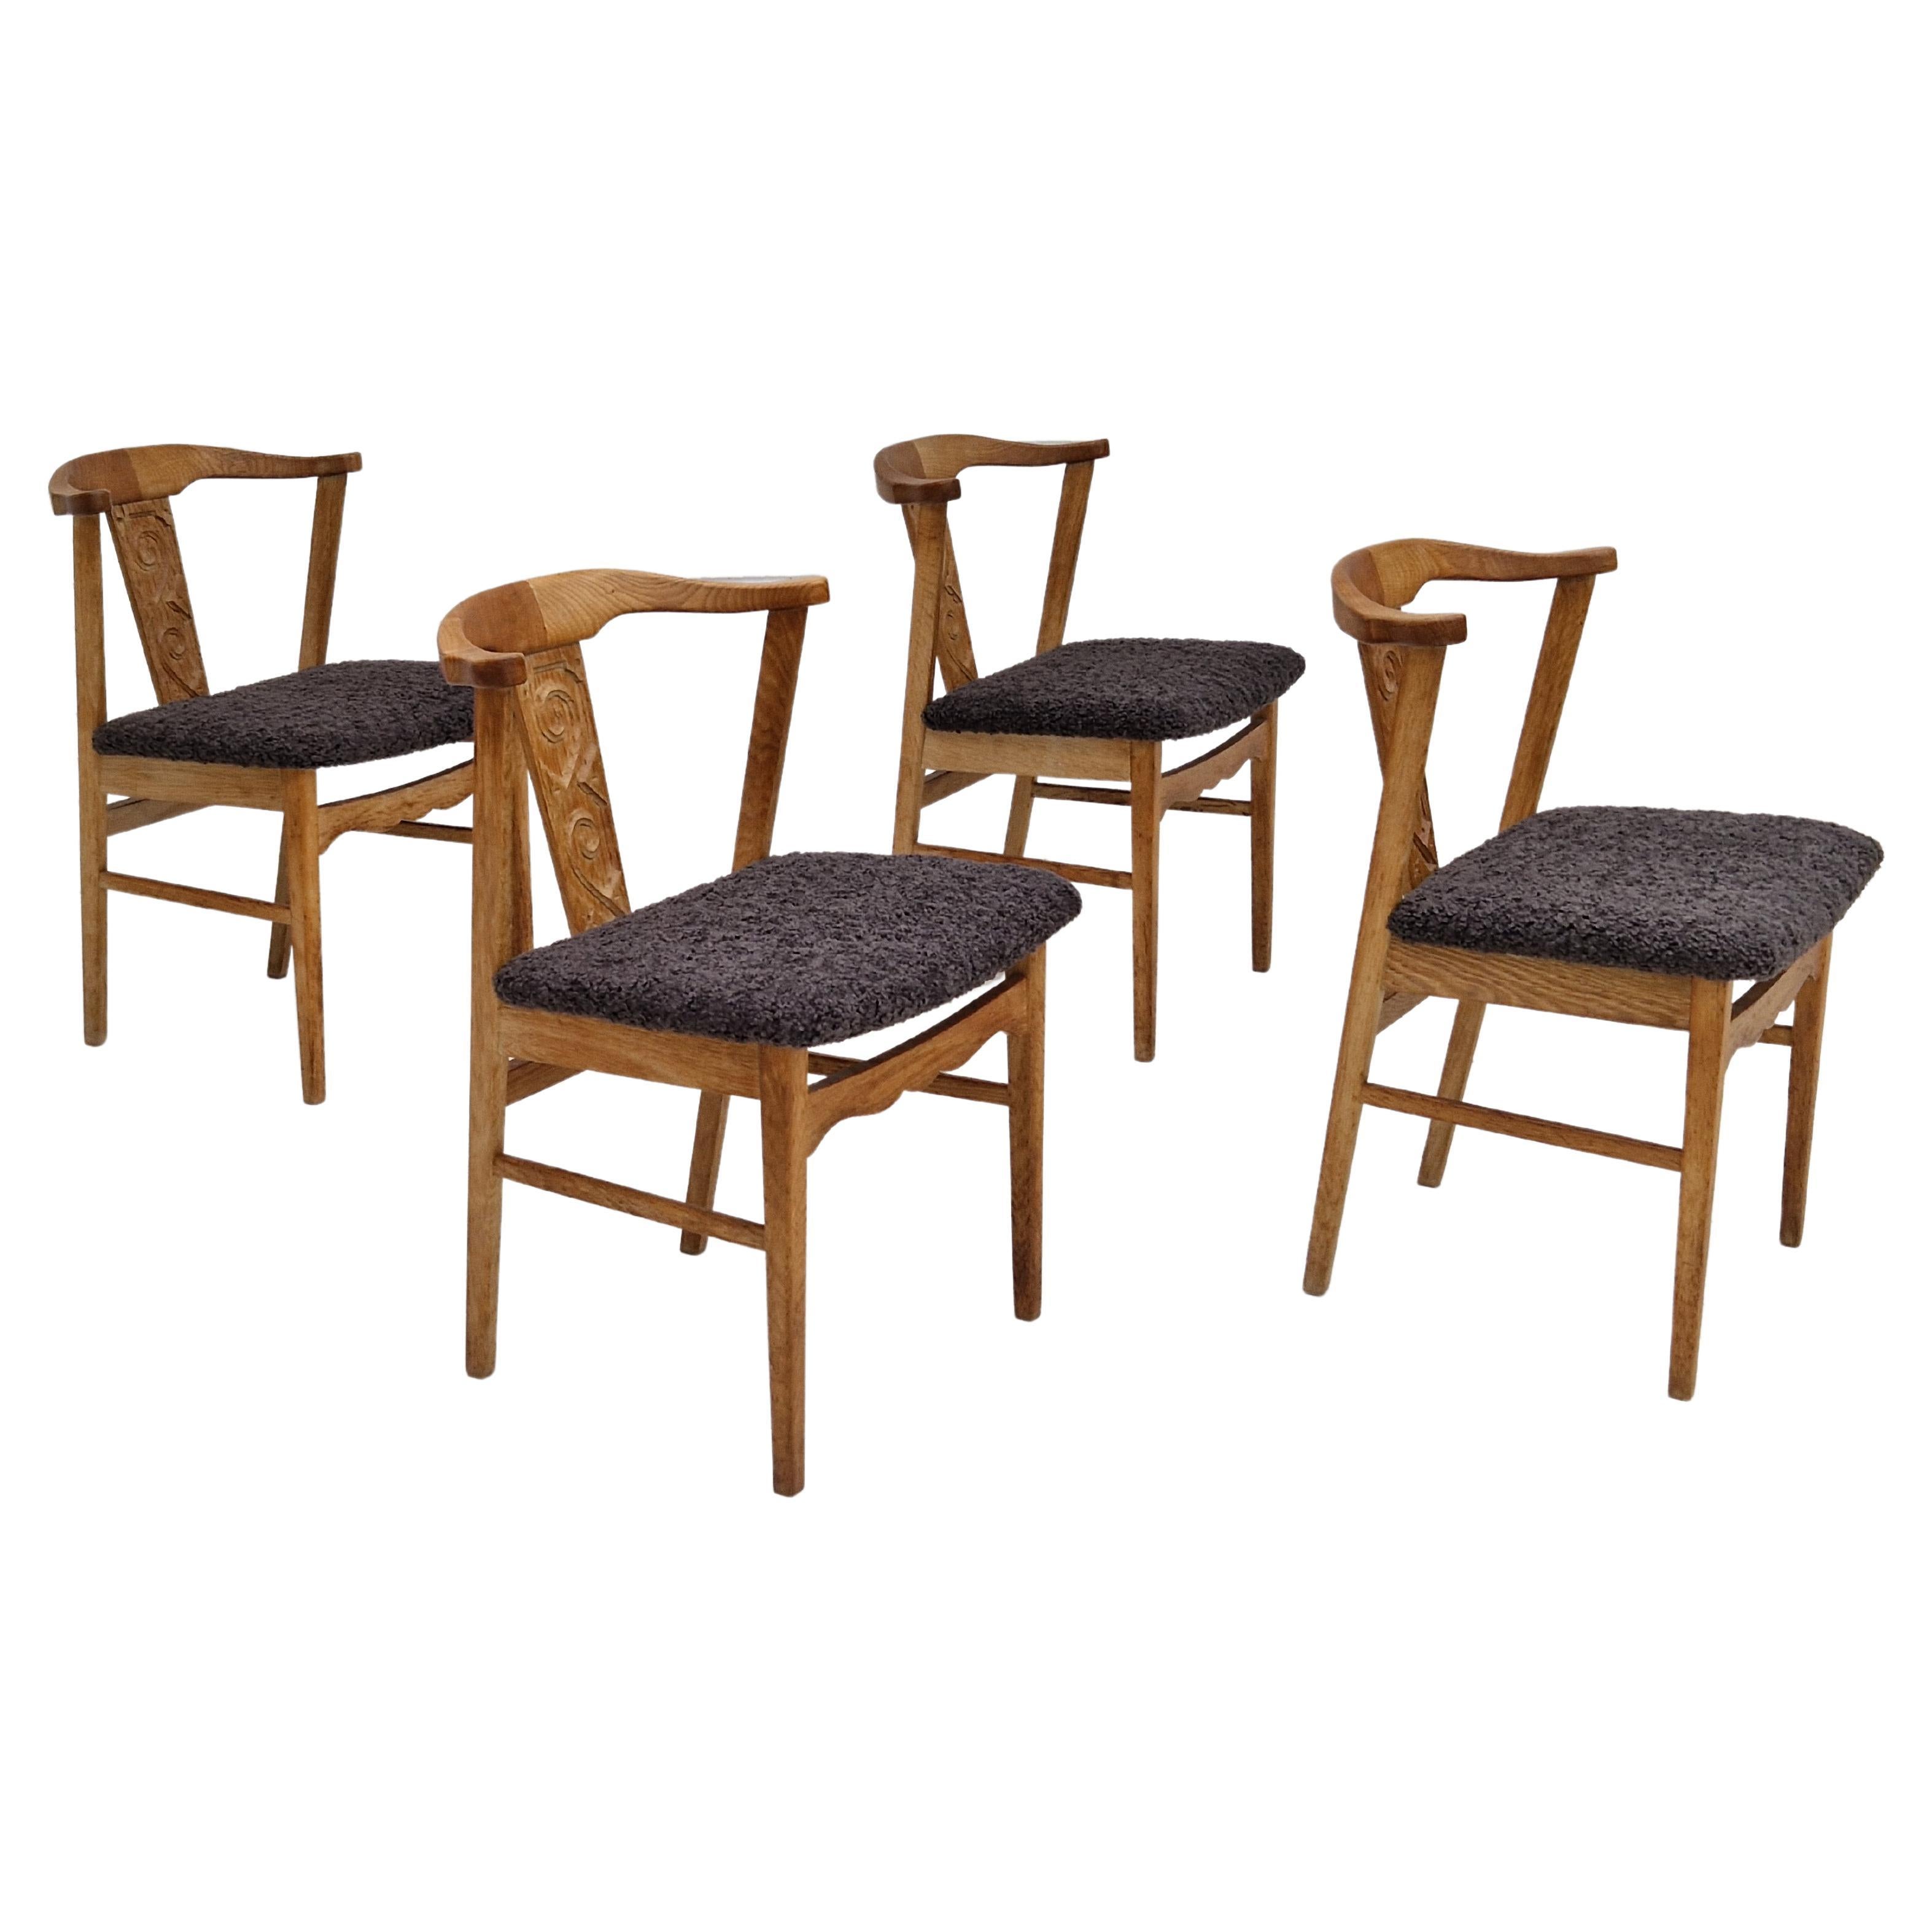 1960s, Danish Design, Set of 4 Dinning Chairs, Oak Wood, Reupholstered